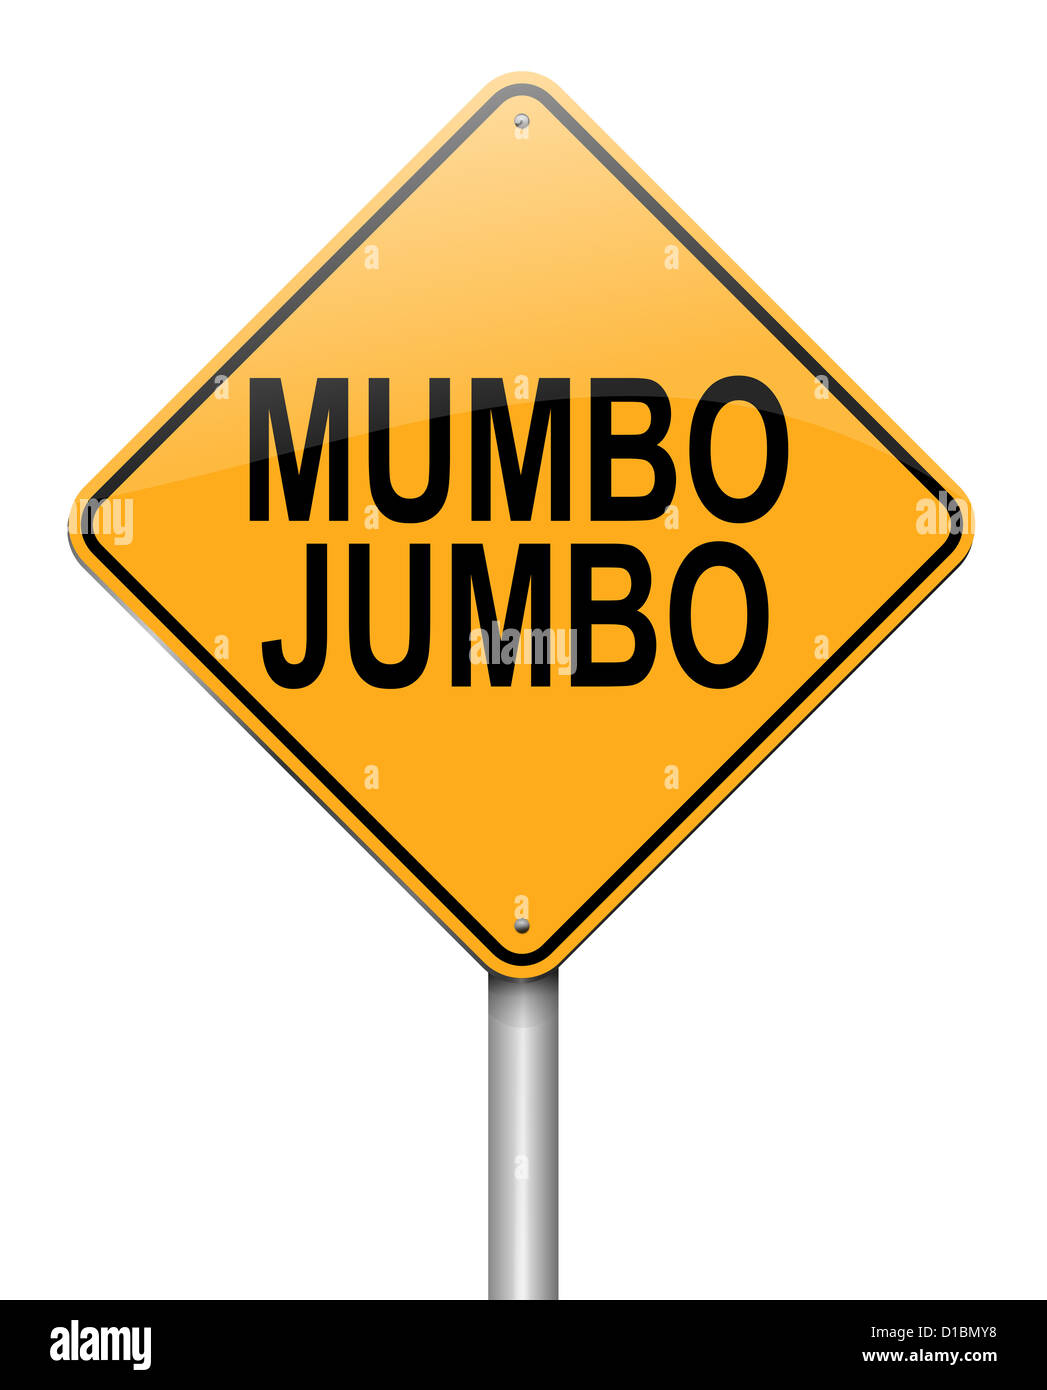 Mumbo jumbo. Banque D'Images